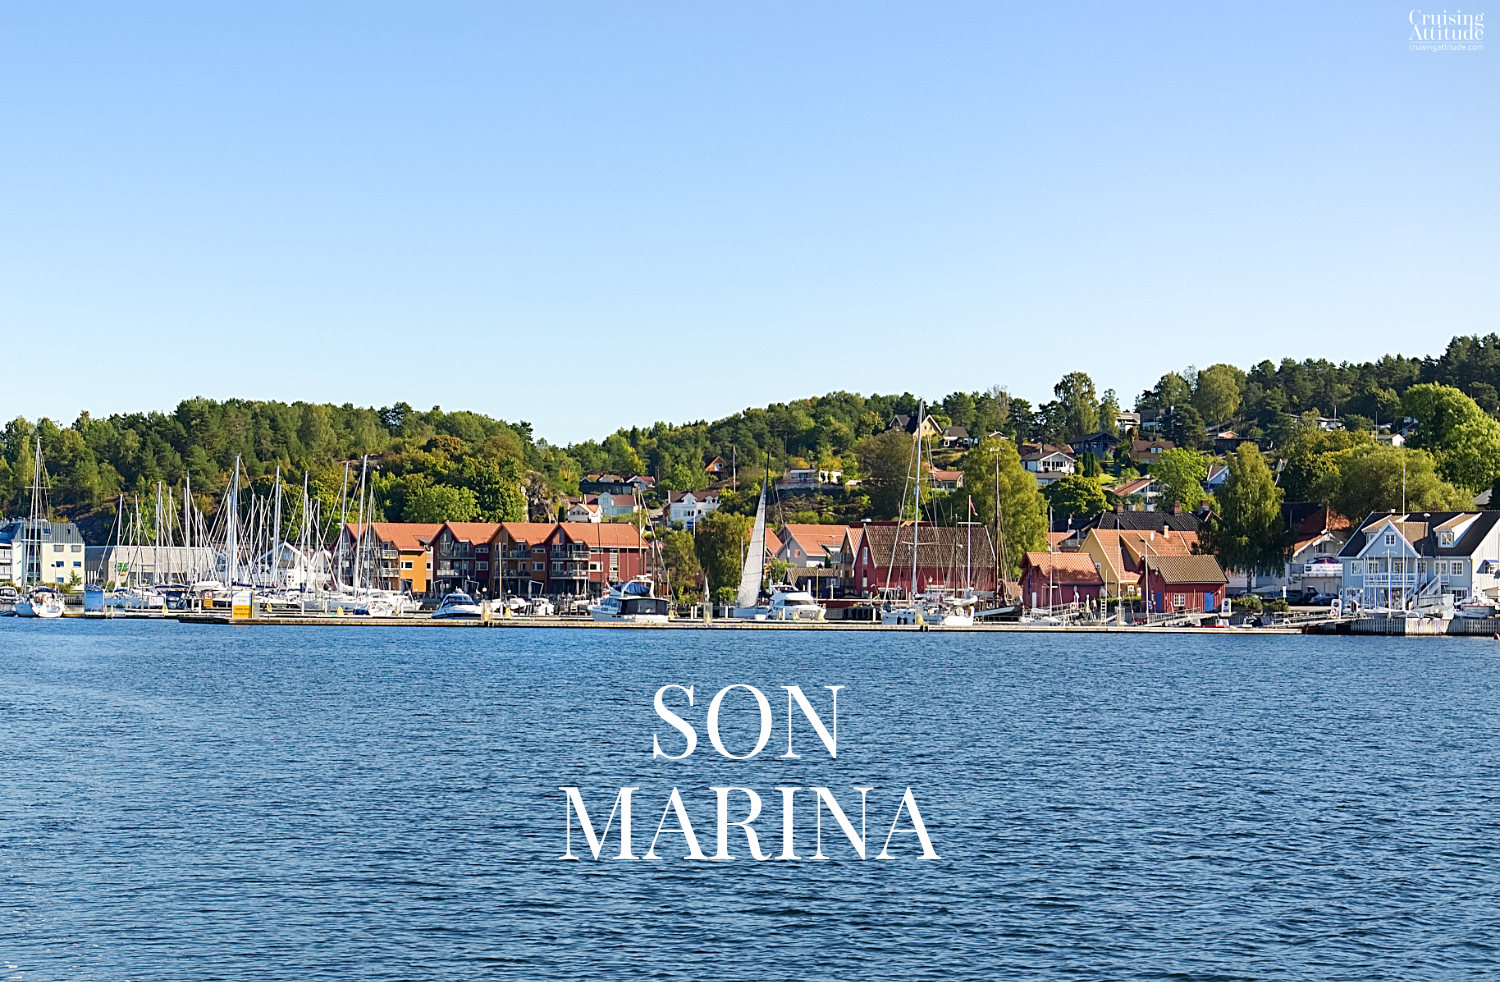 Sailing the Oslofjord - Son Marina | Cruising Attitude Sailing Blog | Discovery 55